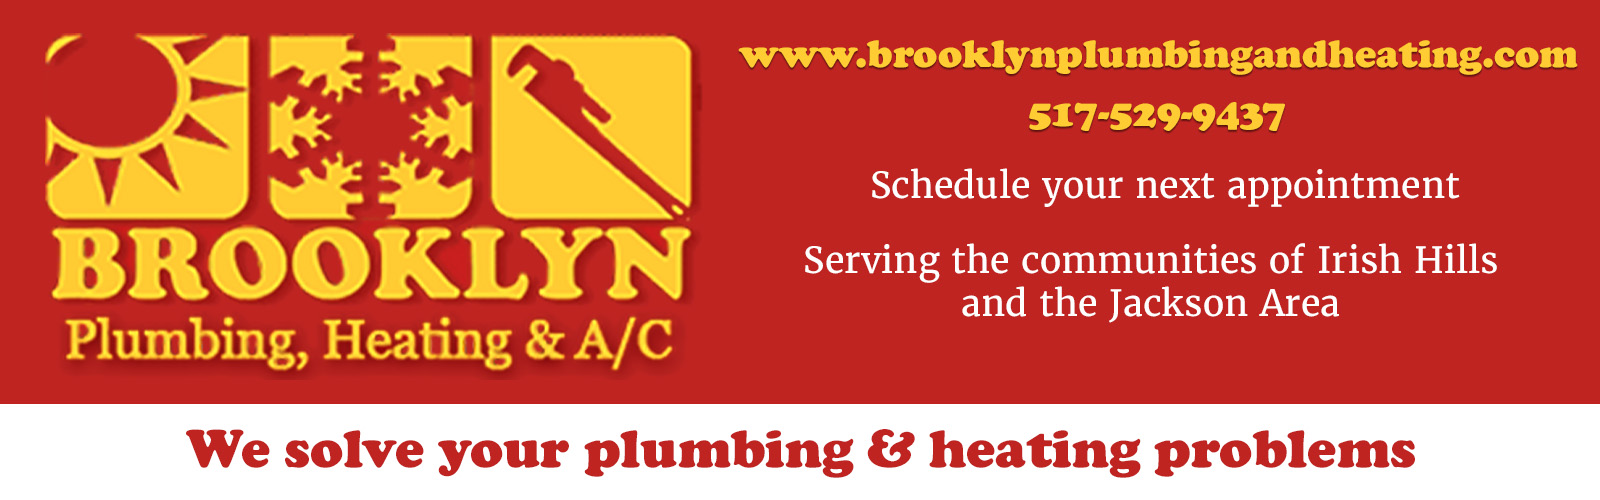 brooklyn plumbing heating ac, jtv